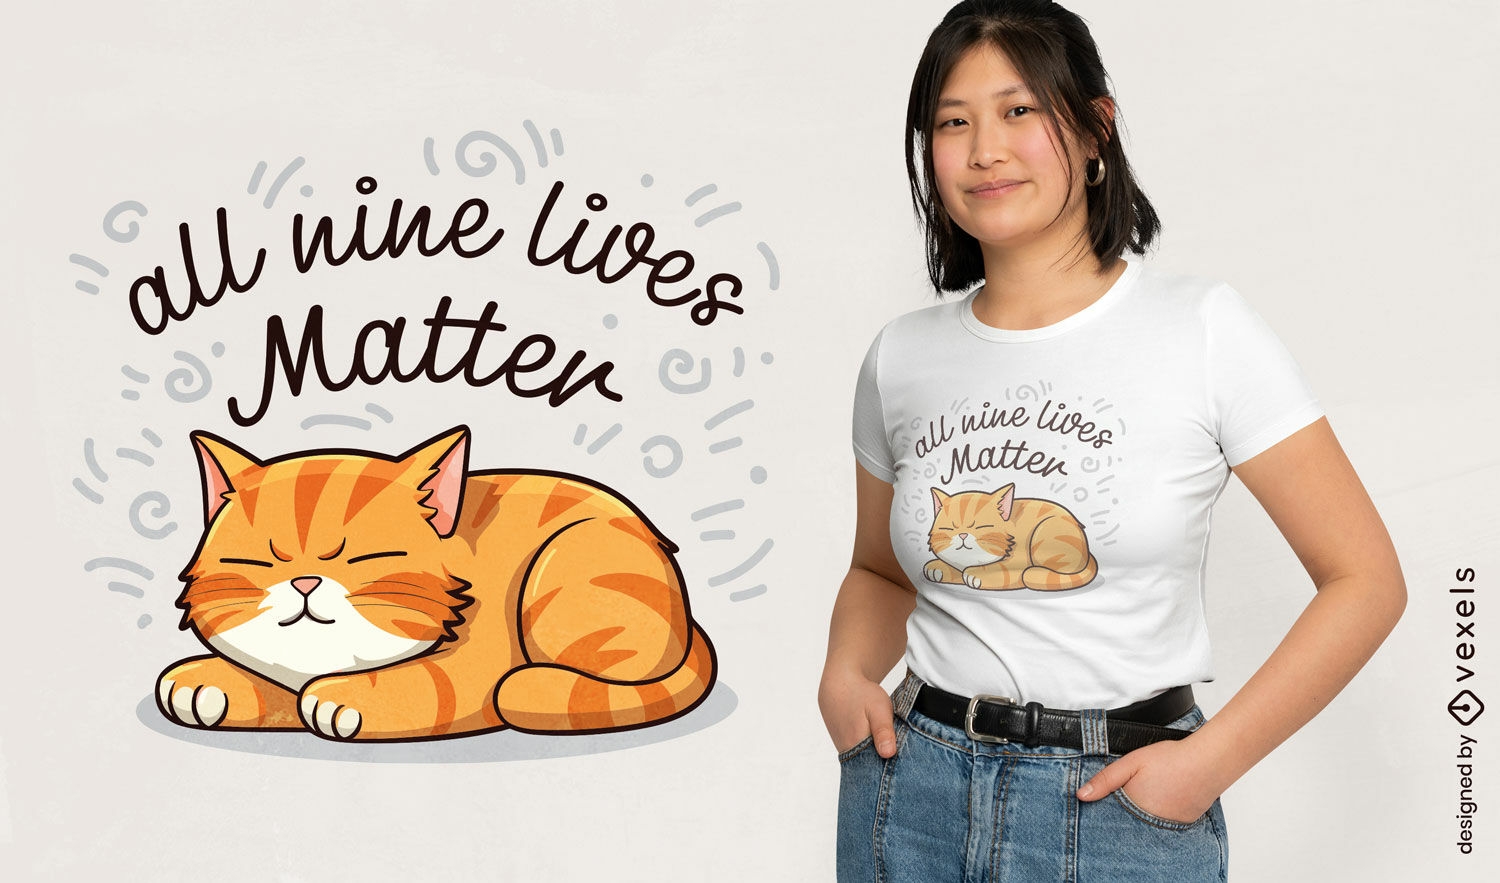 Funny cat lives matter quote t-shirt design